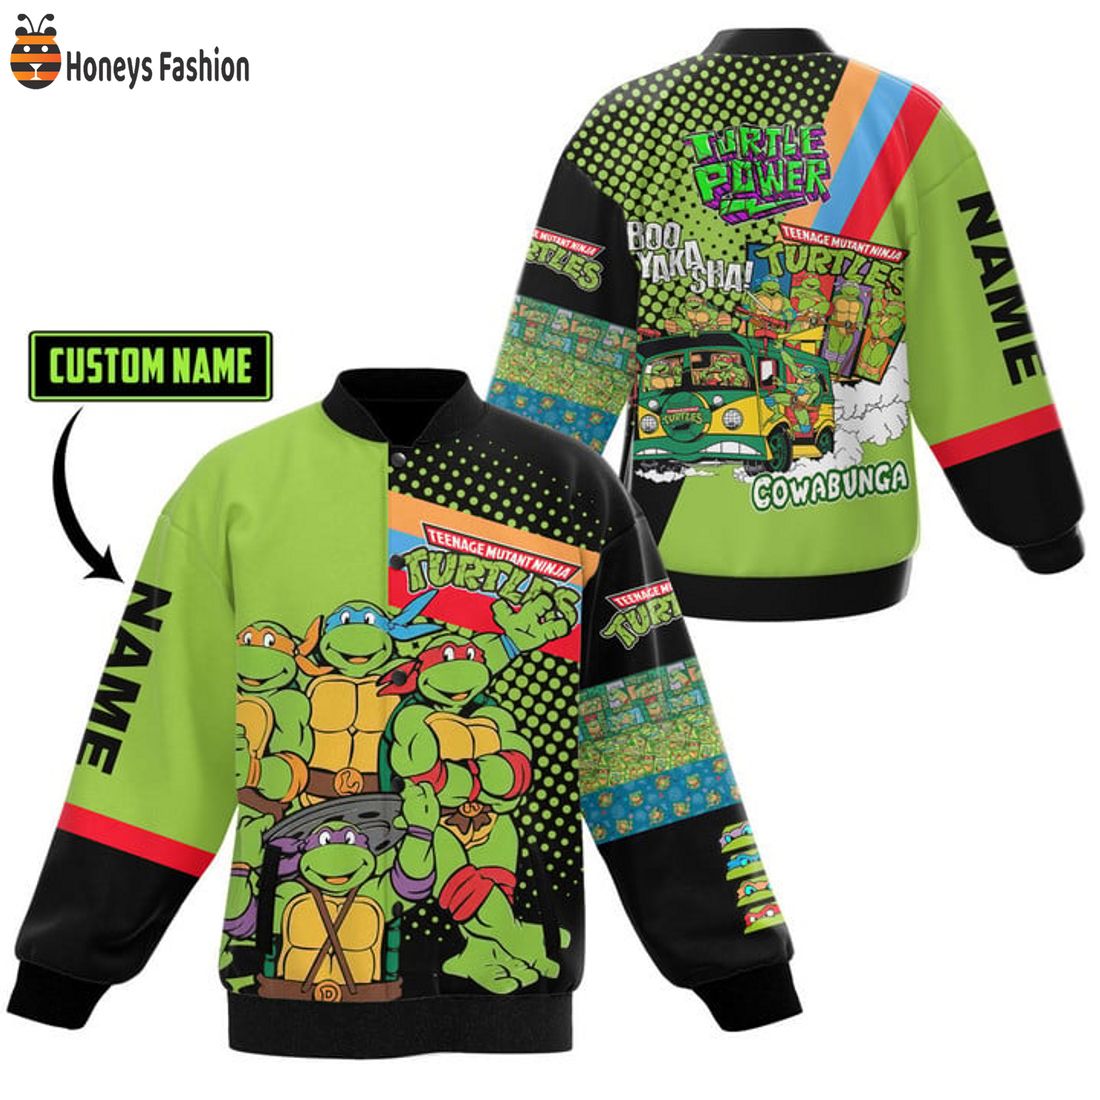 TRENDING TMNT Turtle Power Cowabunga Custom Name Baseball Jacket